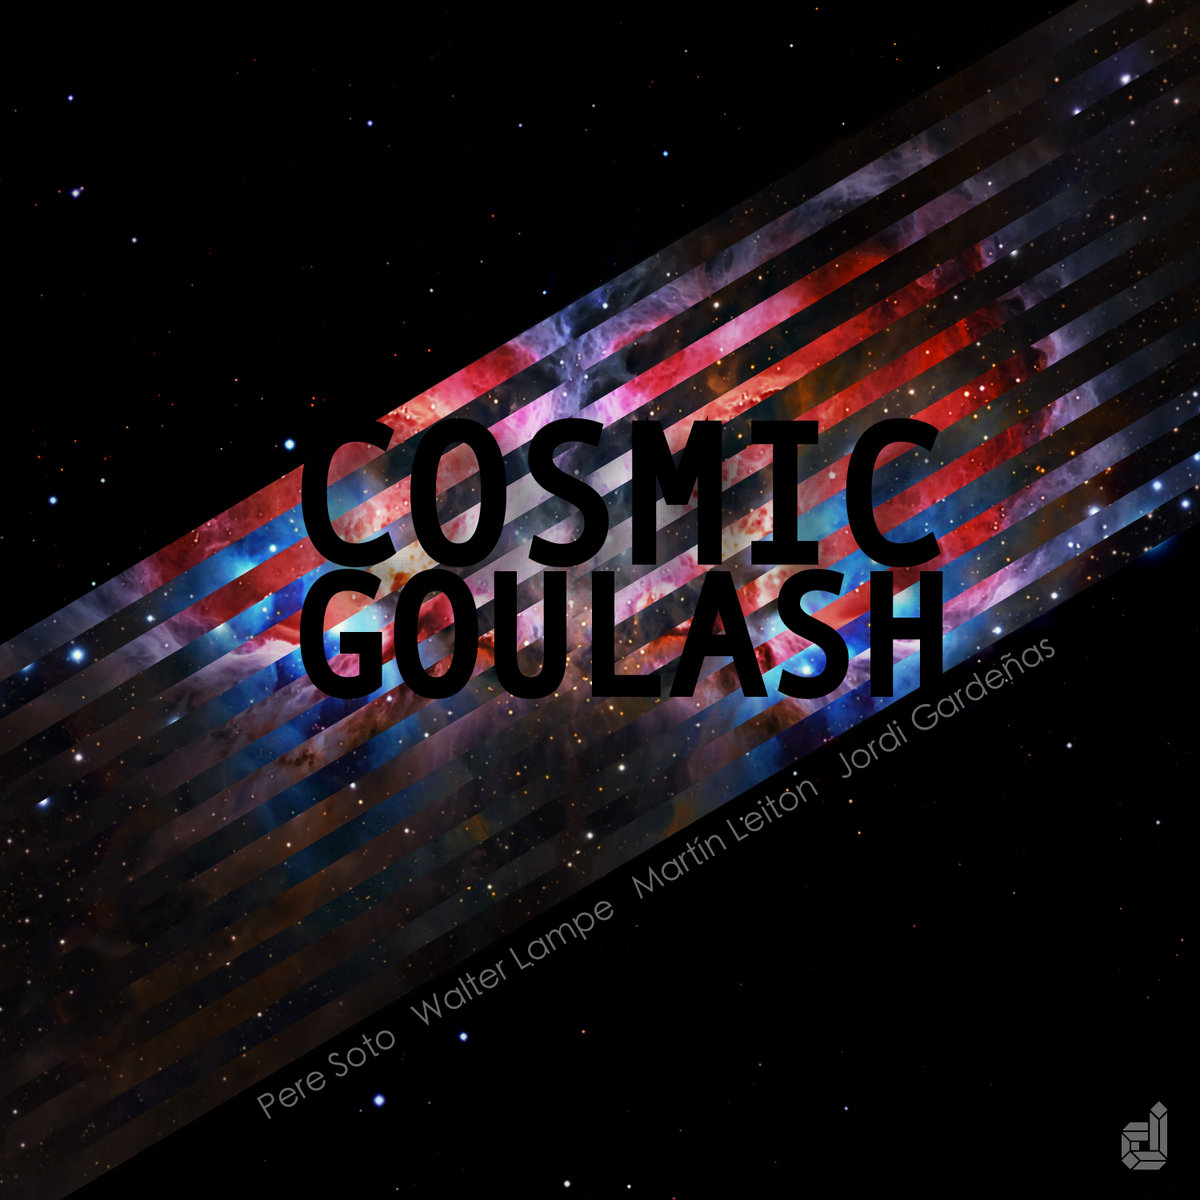 Cosmic Goulash